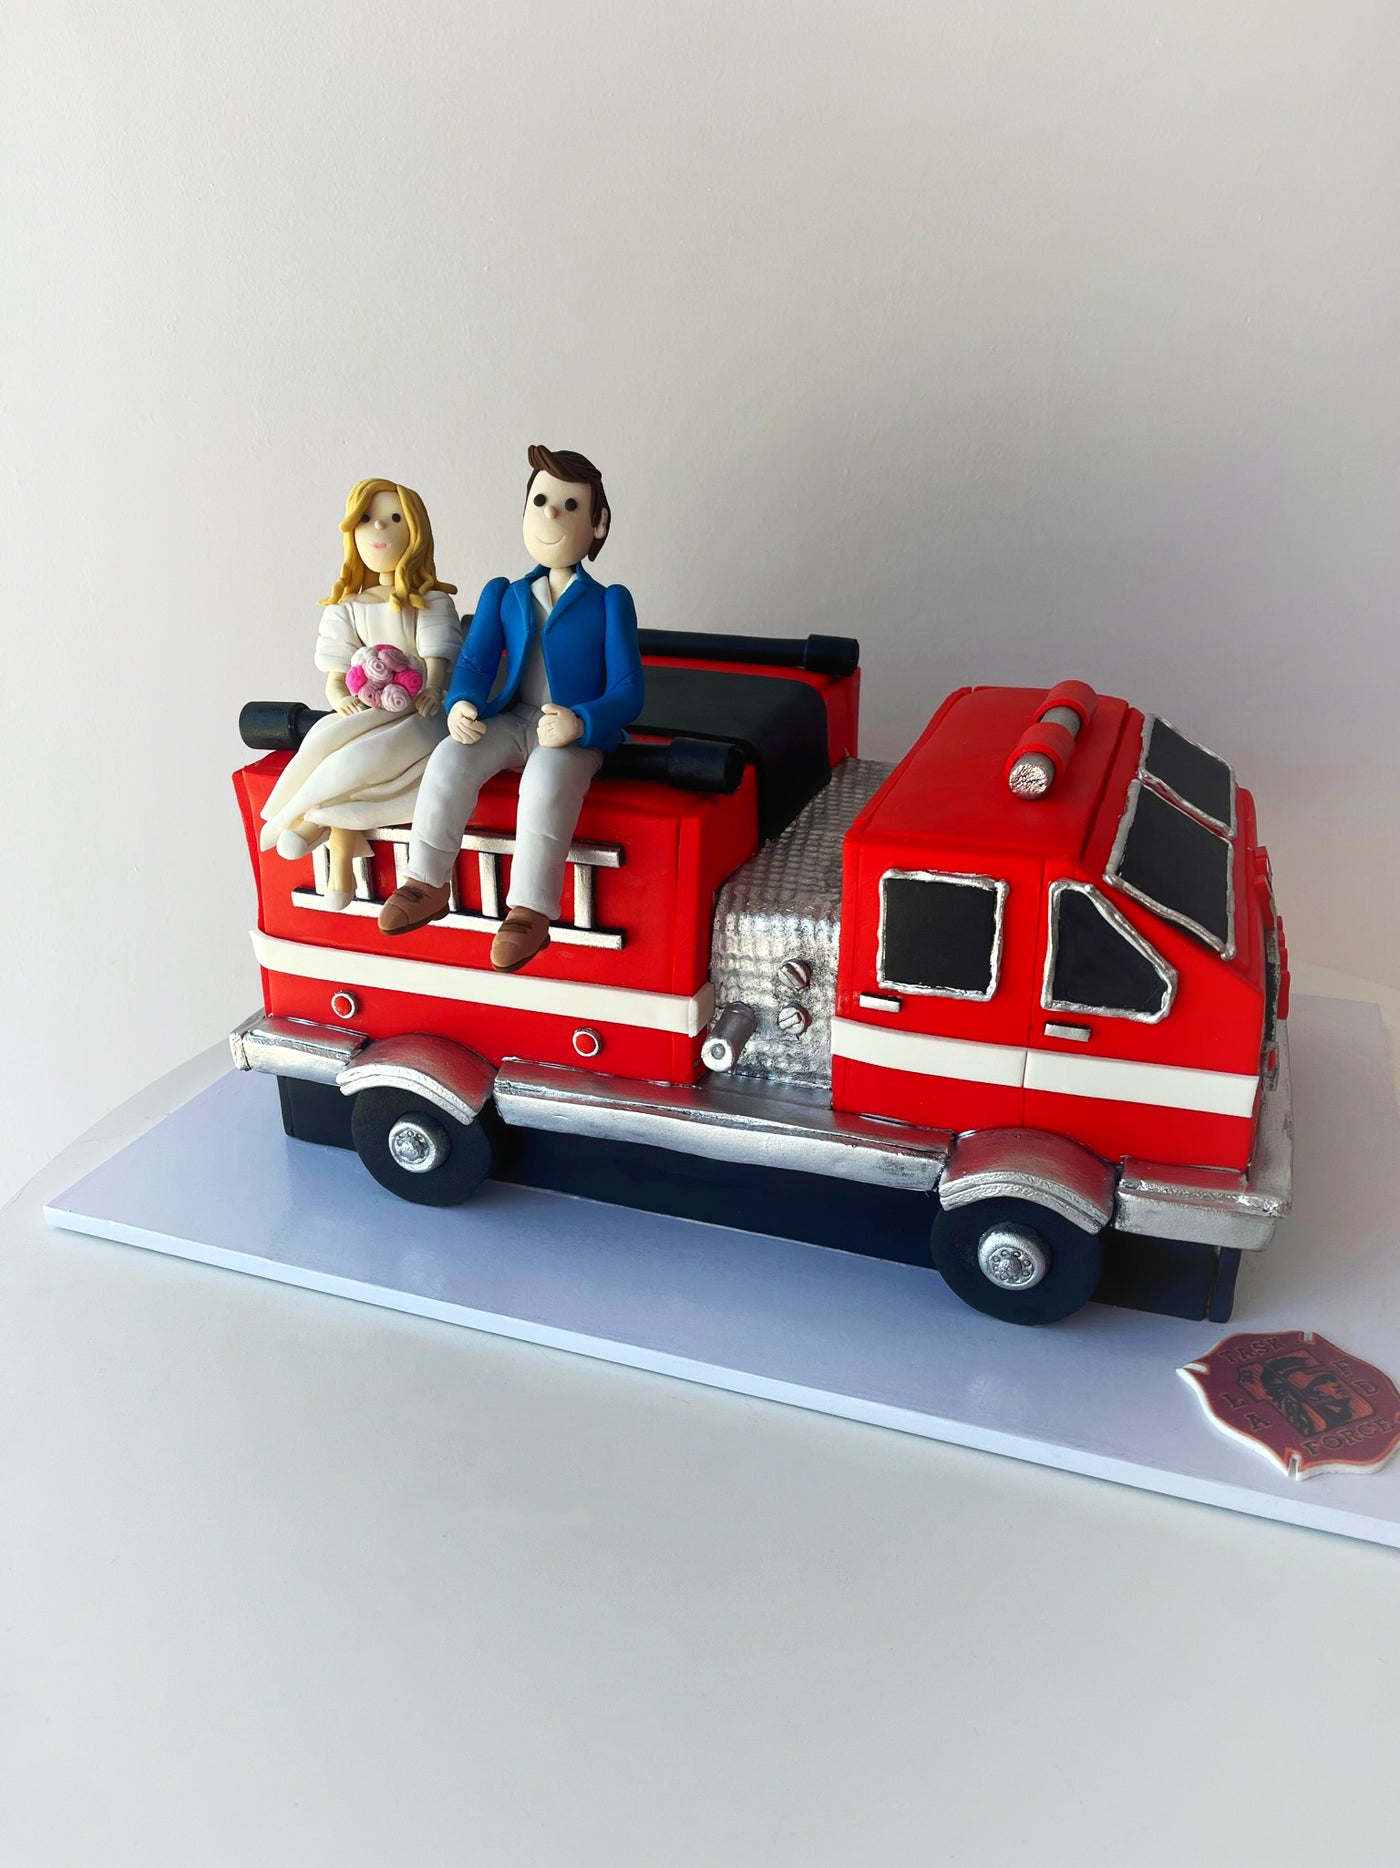 Firetrucks Engagement Cake - Sweet E's Bake Shop - The Cake Shop